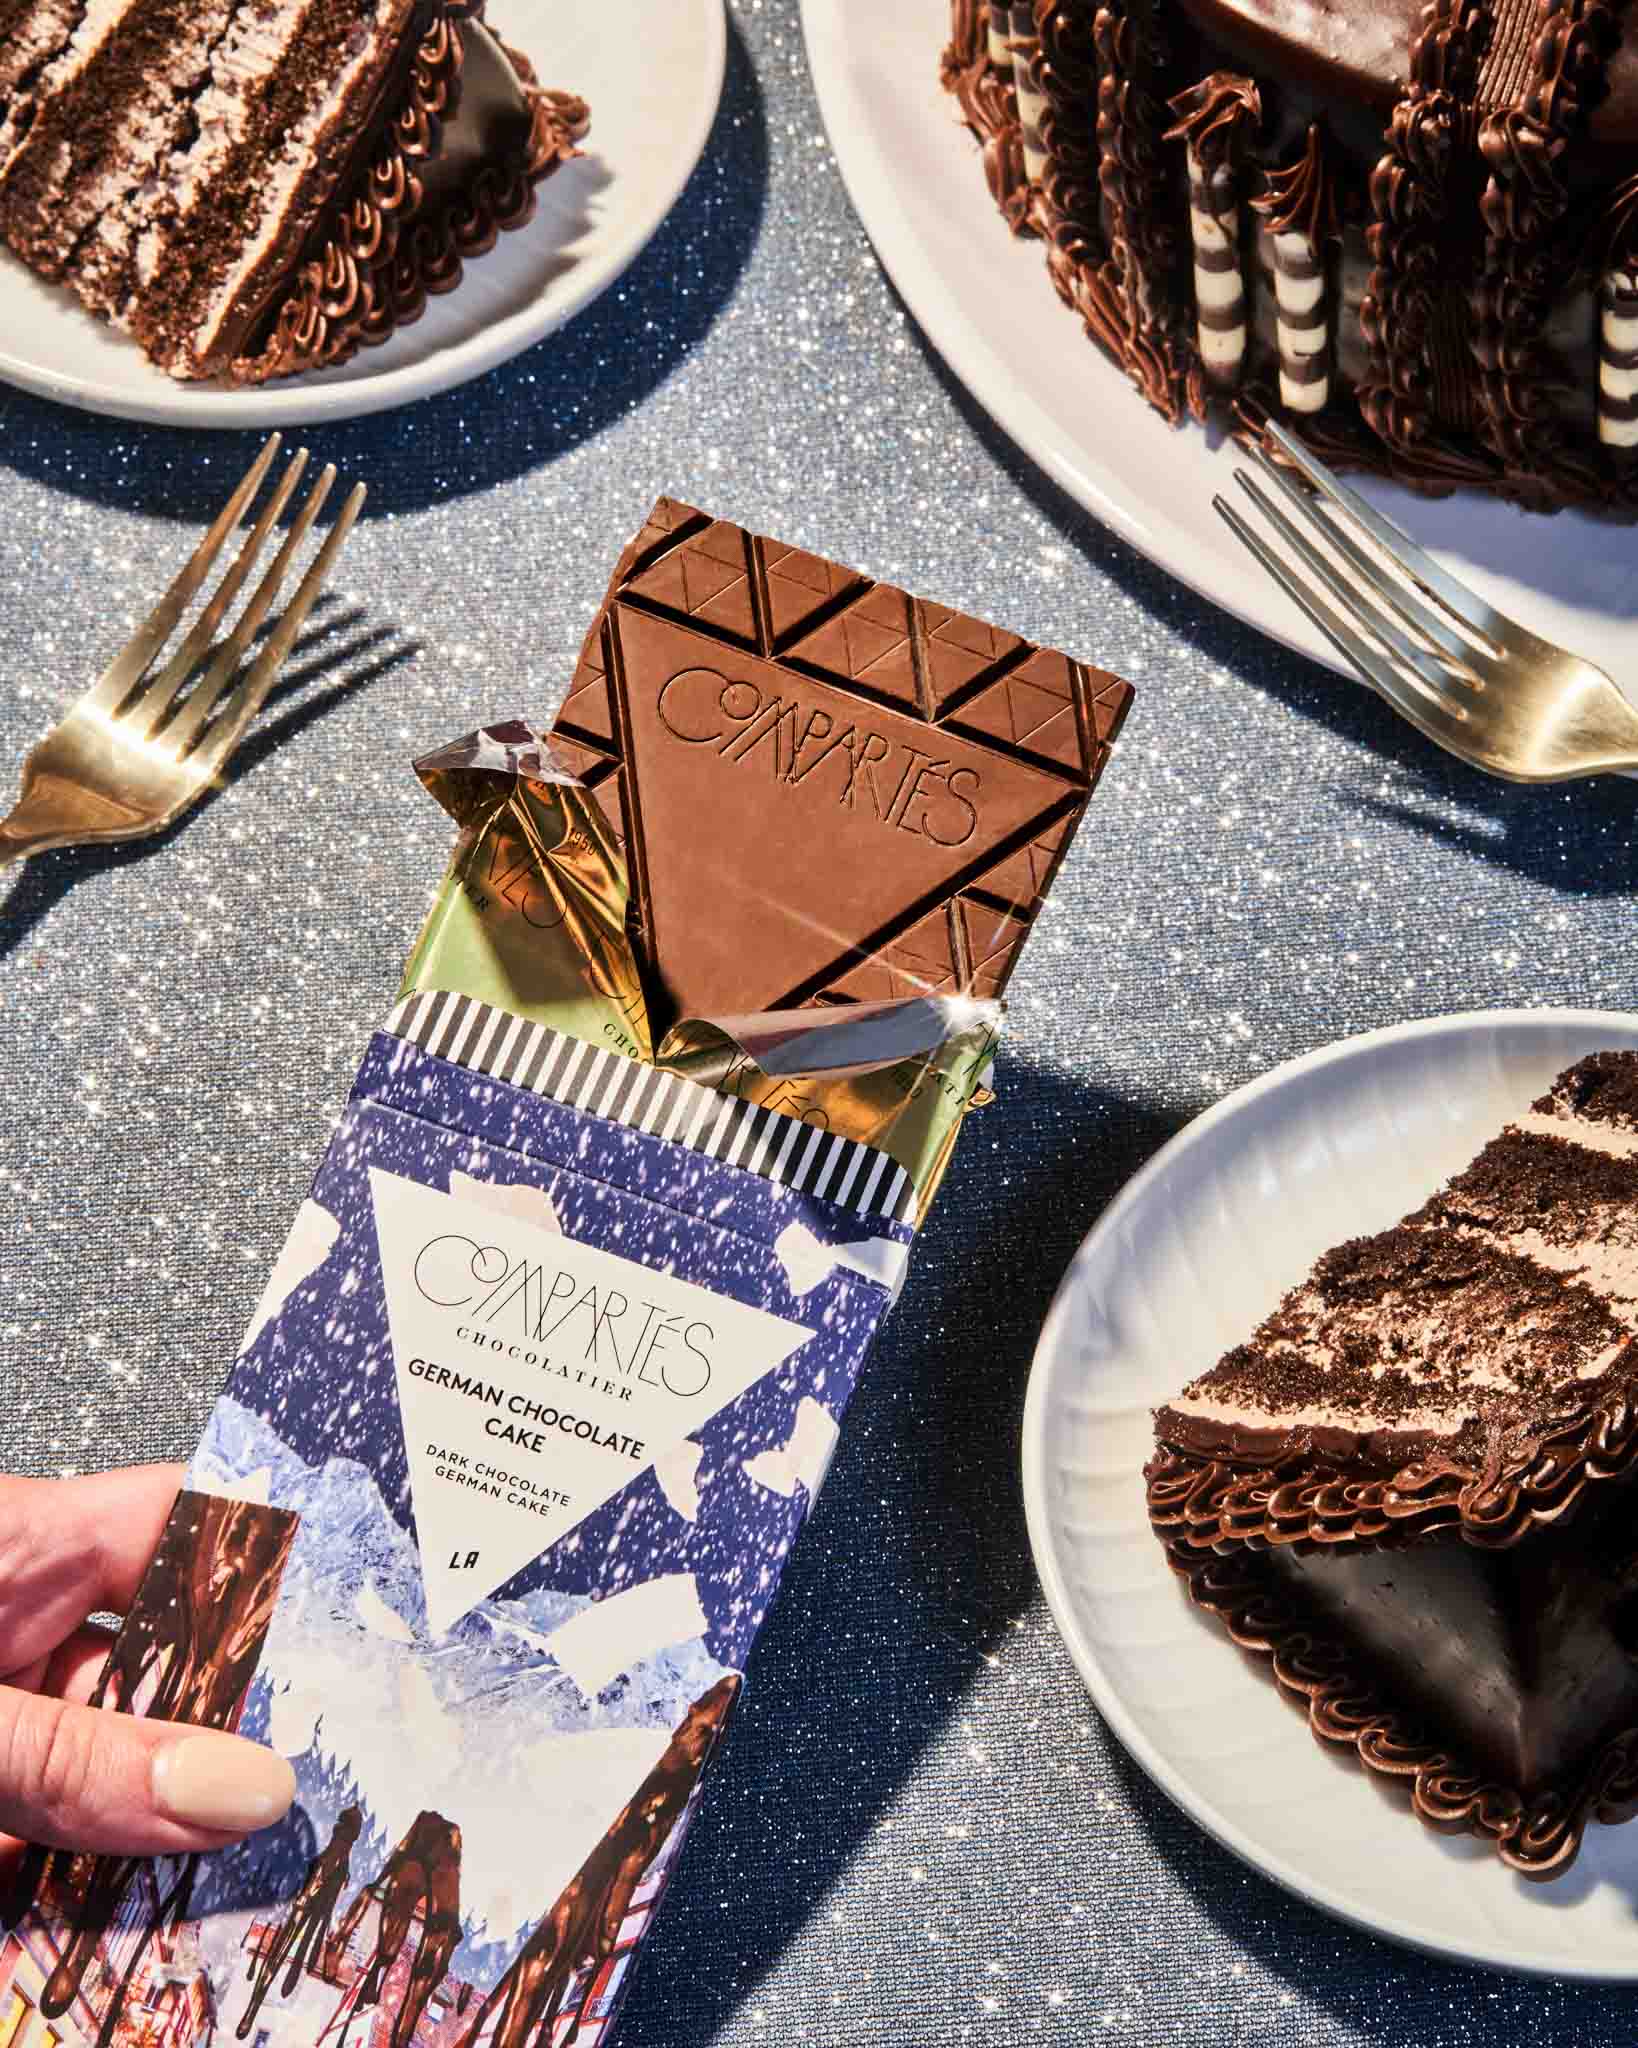 Compartes Chocolate Bars - Fancy Chocolate Bar Gifts - German Chocolate Cake Luxurious Dark Chocolate